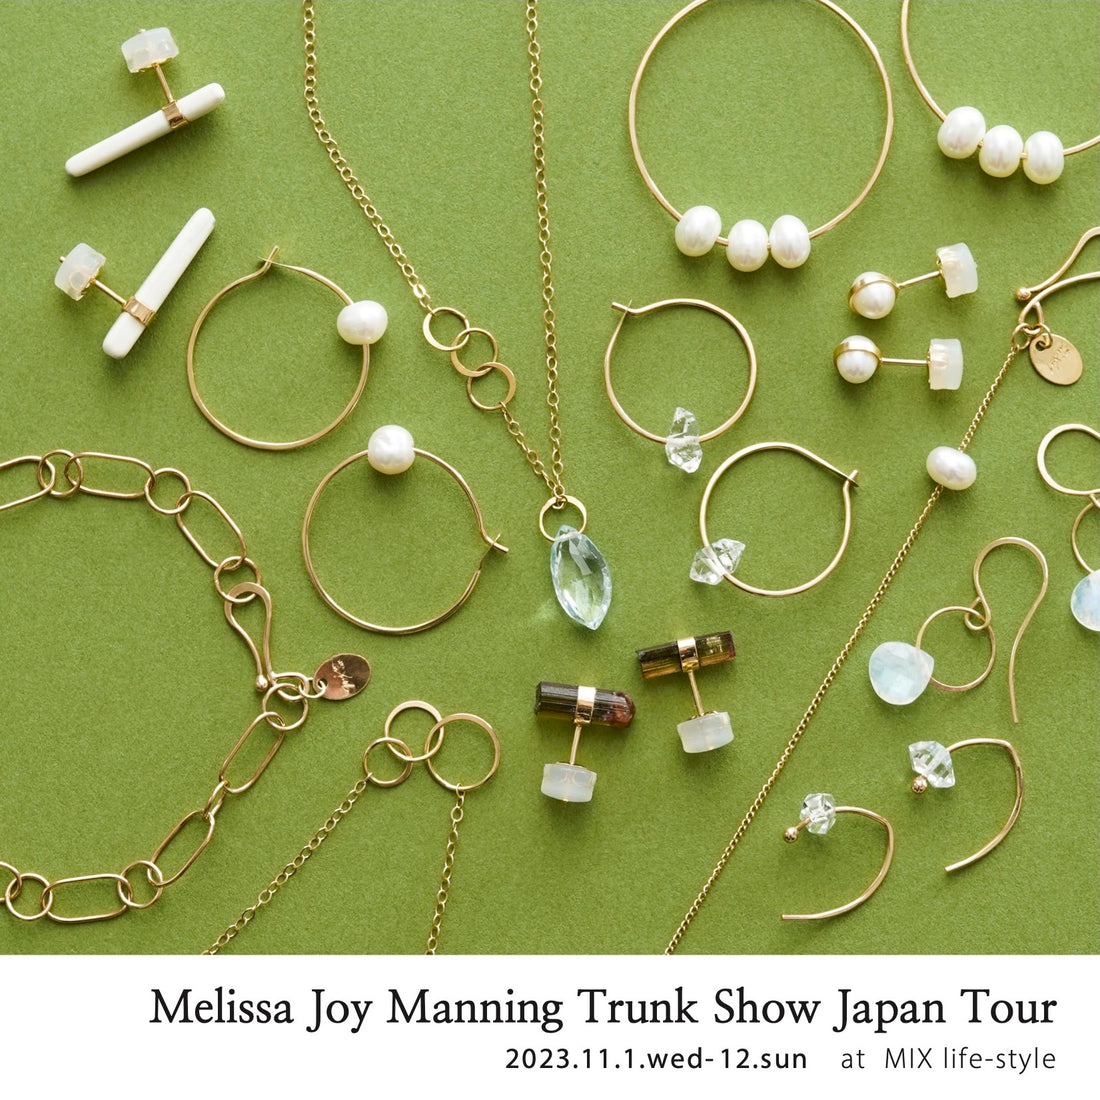 Melissa Joy Manning Trunk Show Japan Tour